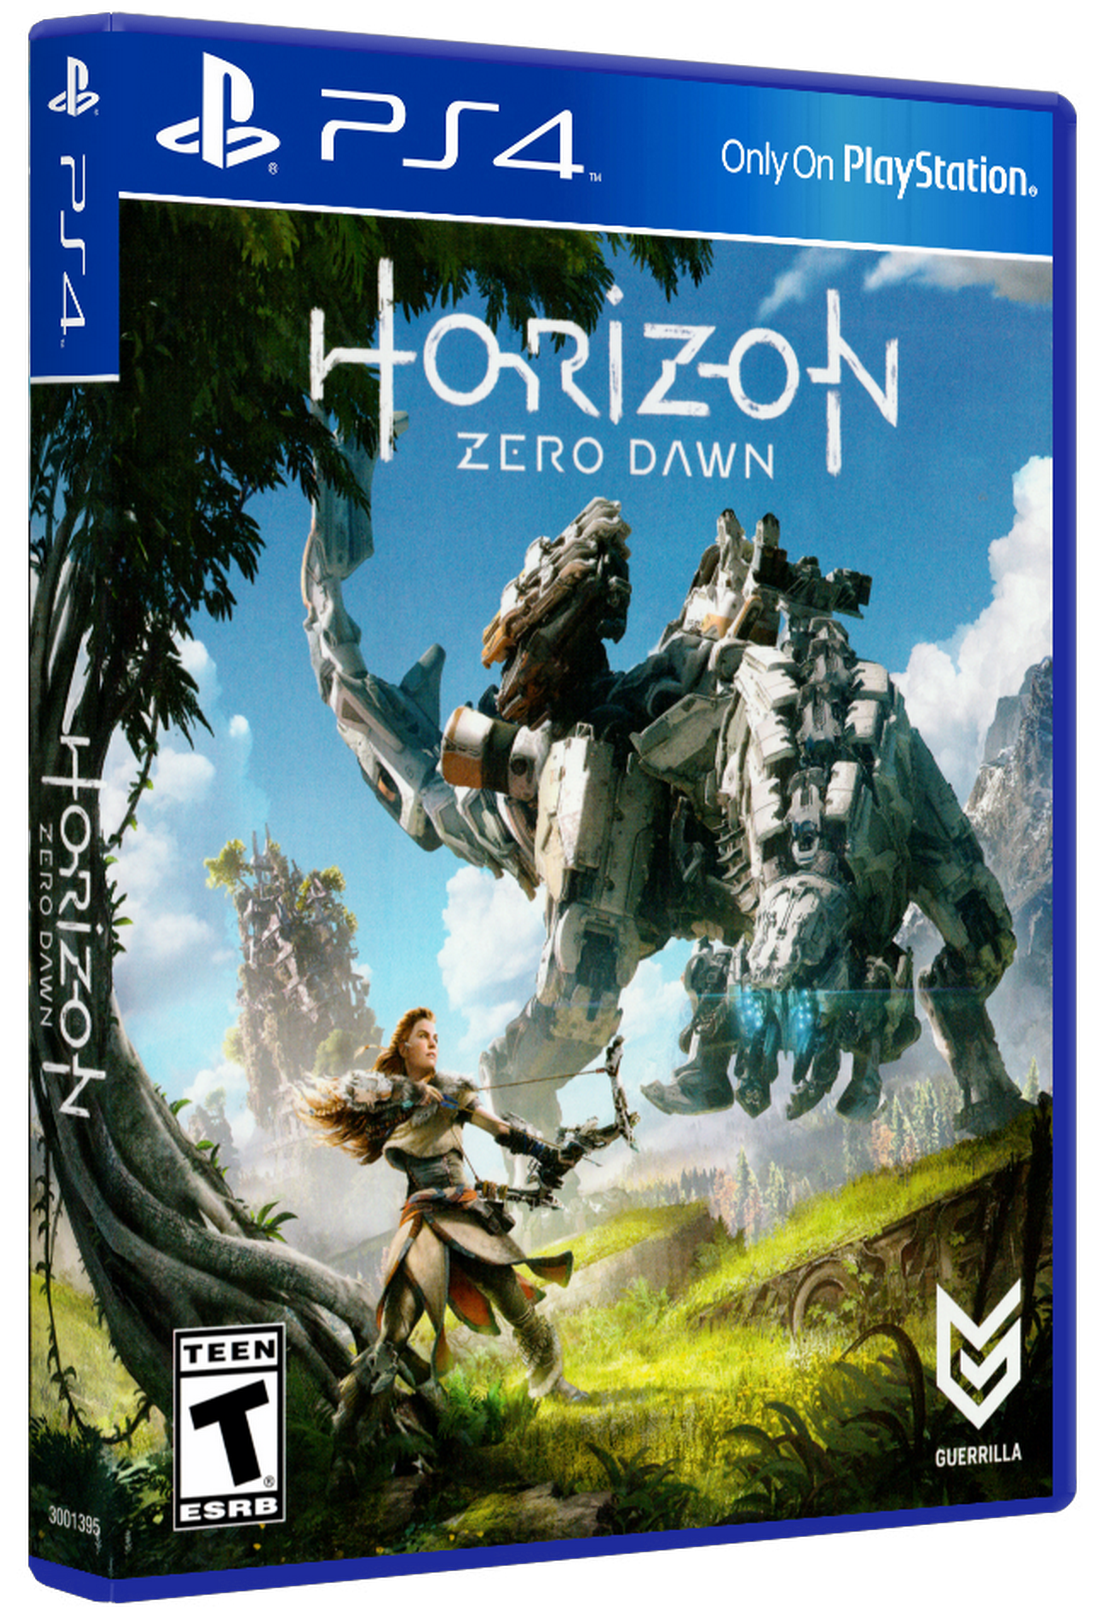 horizon-zero-dawn-details-launchbox-games-database